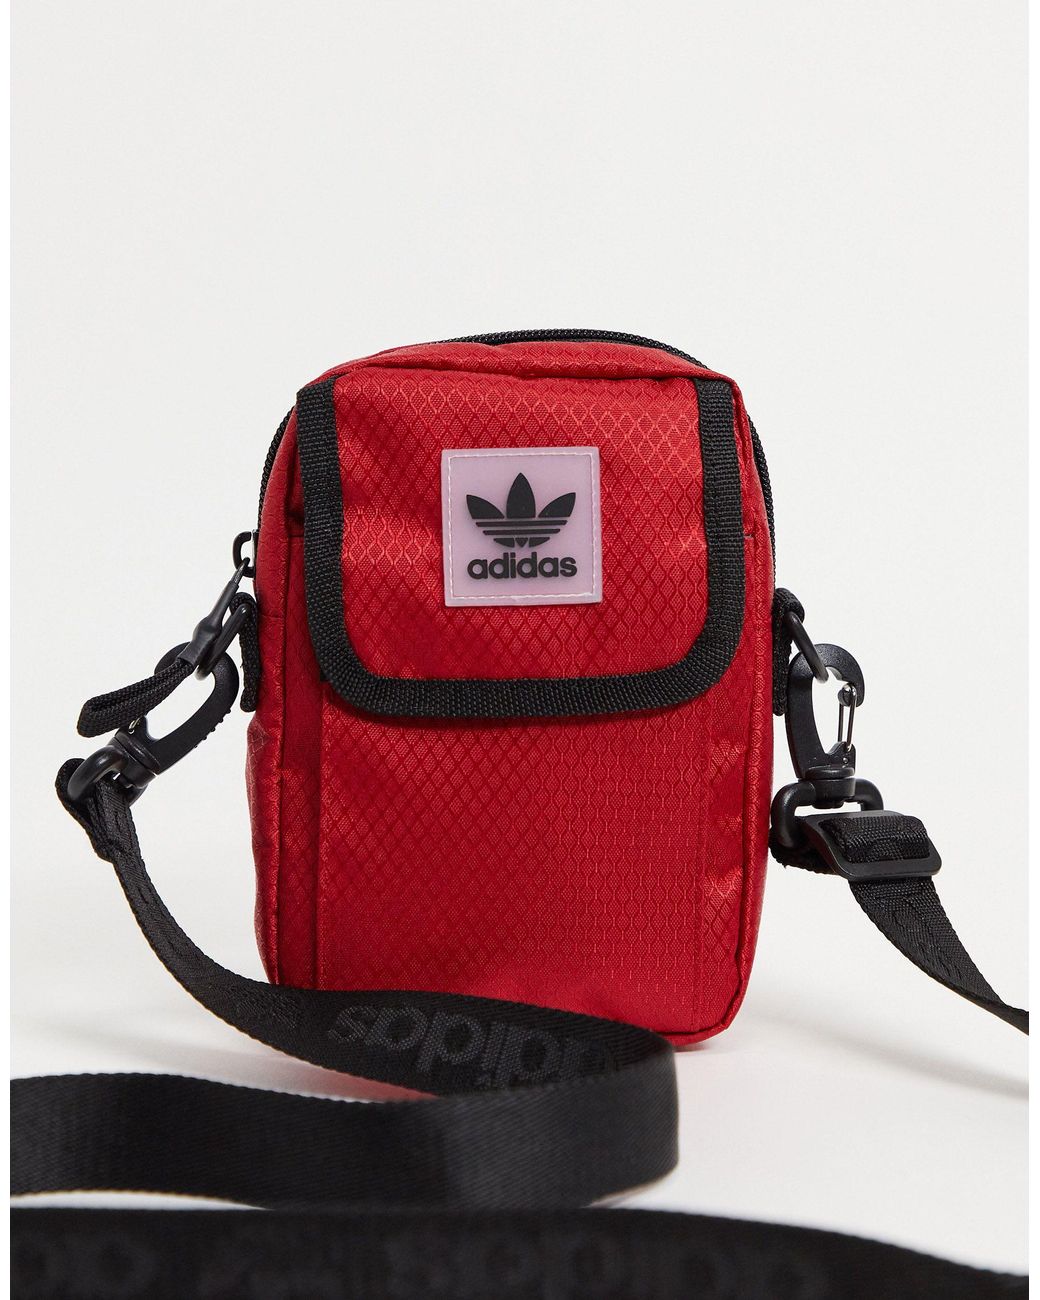 adidas Originals Utility Festival Crossbody Bag in Red for Men - Lyst